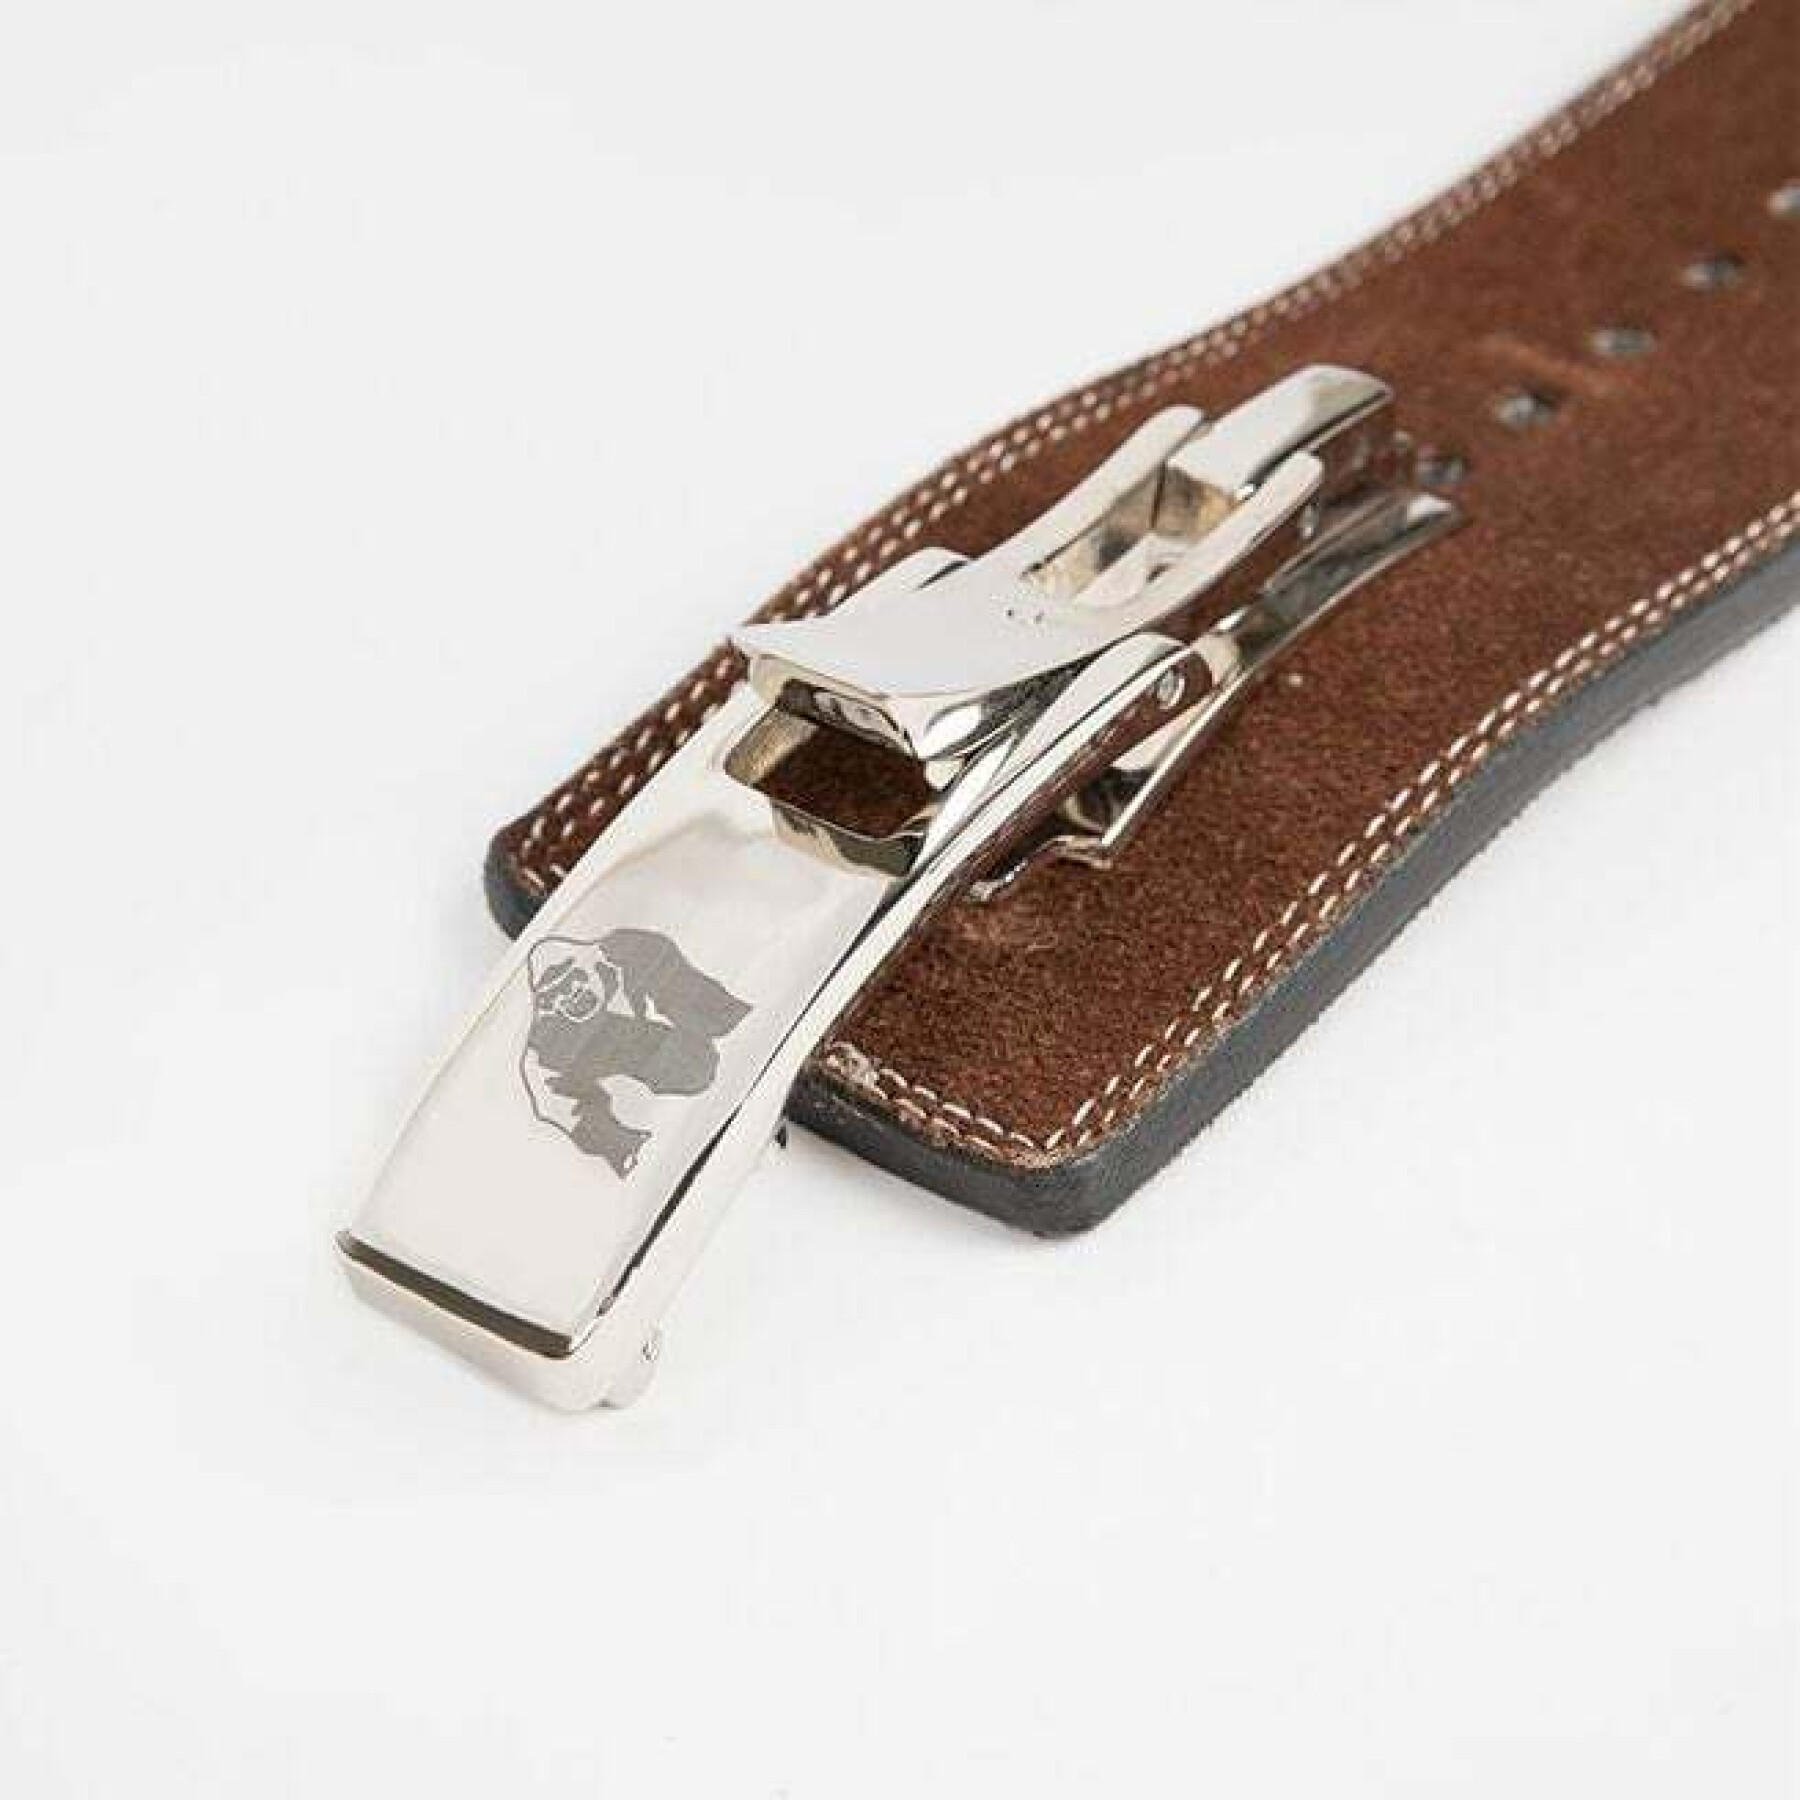 4-inch leather lifting belt Gorilla Wear